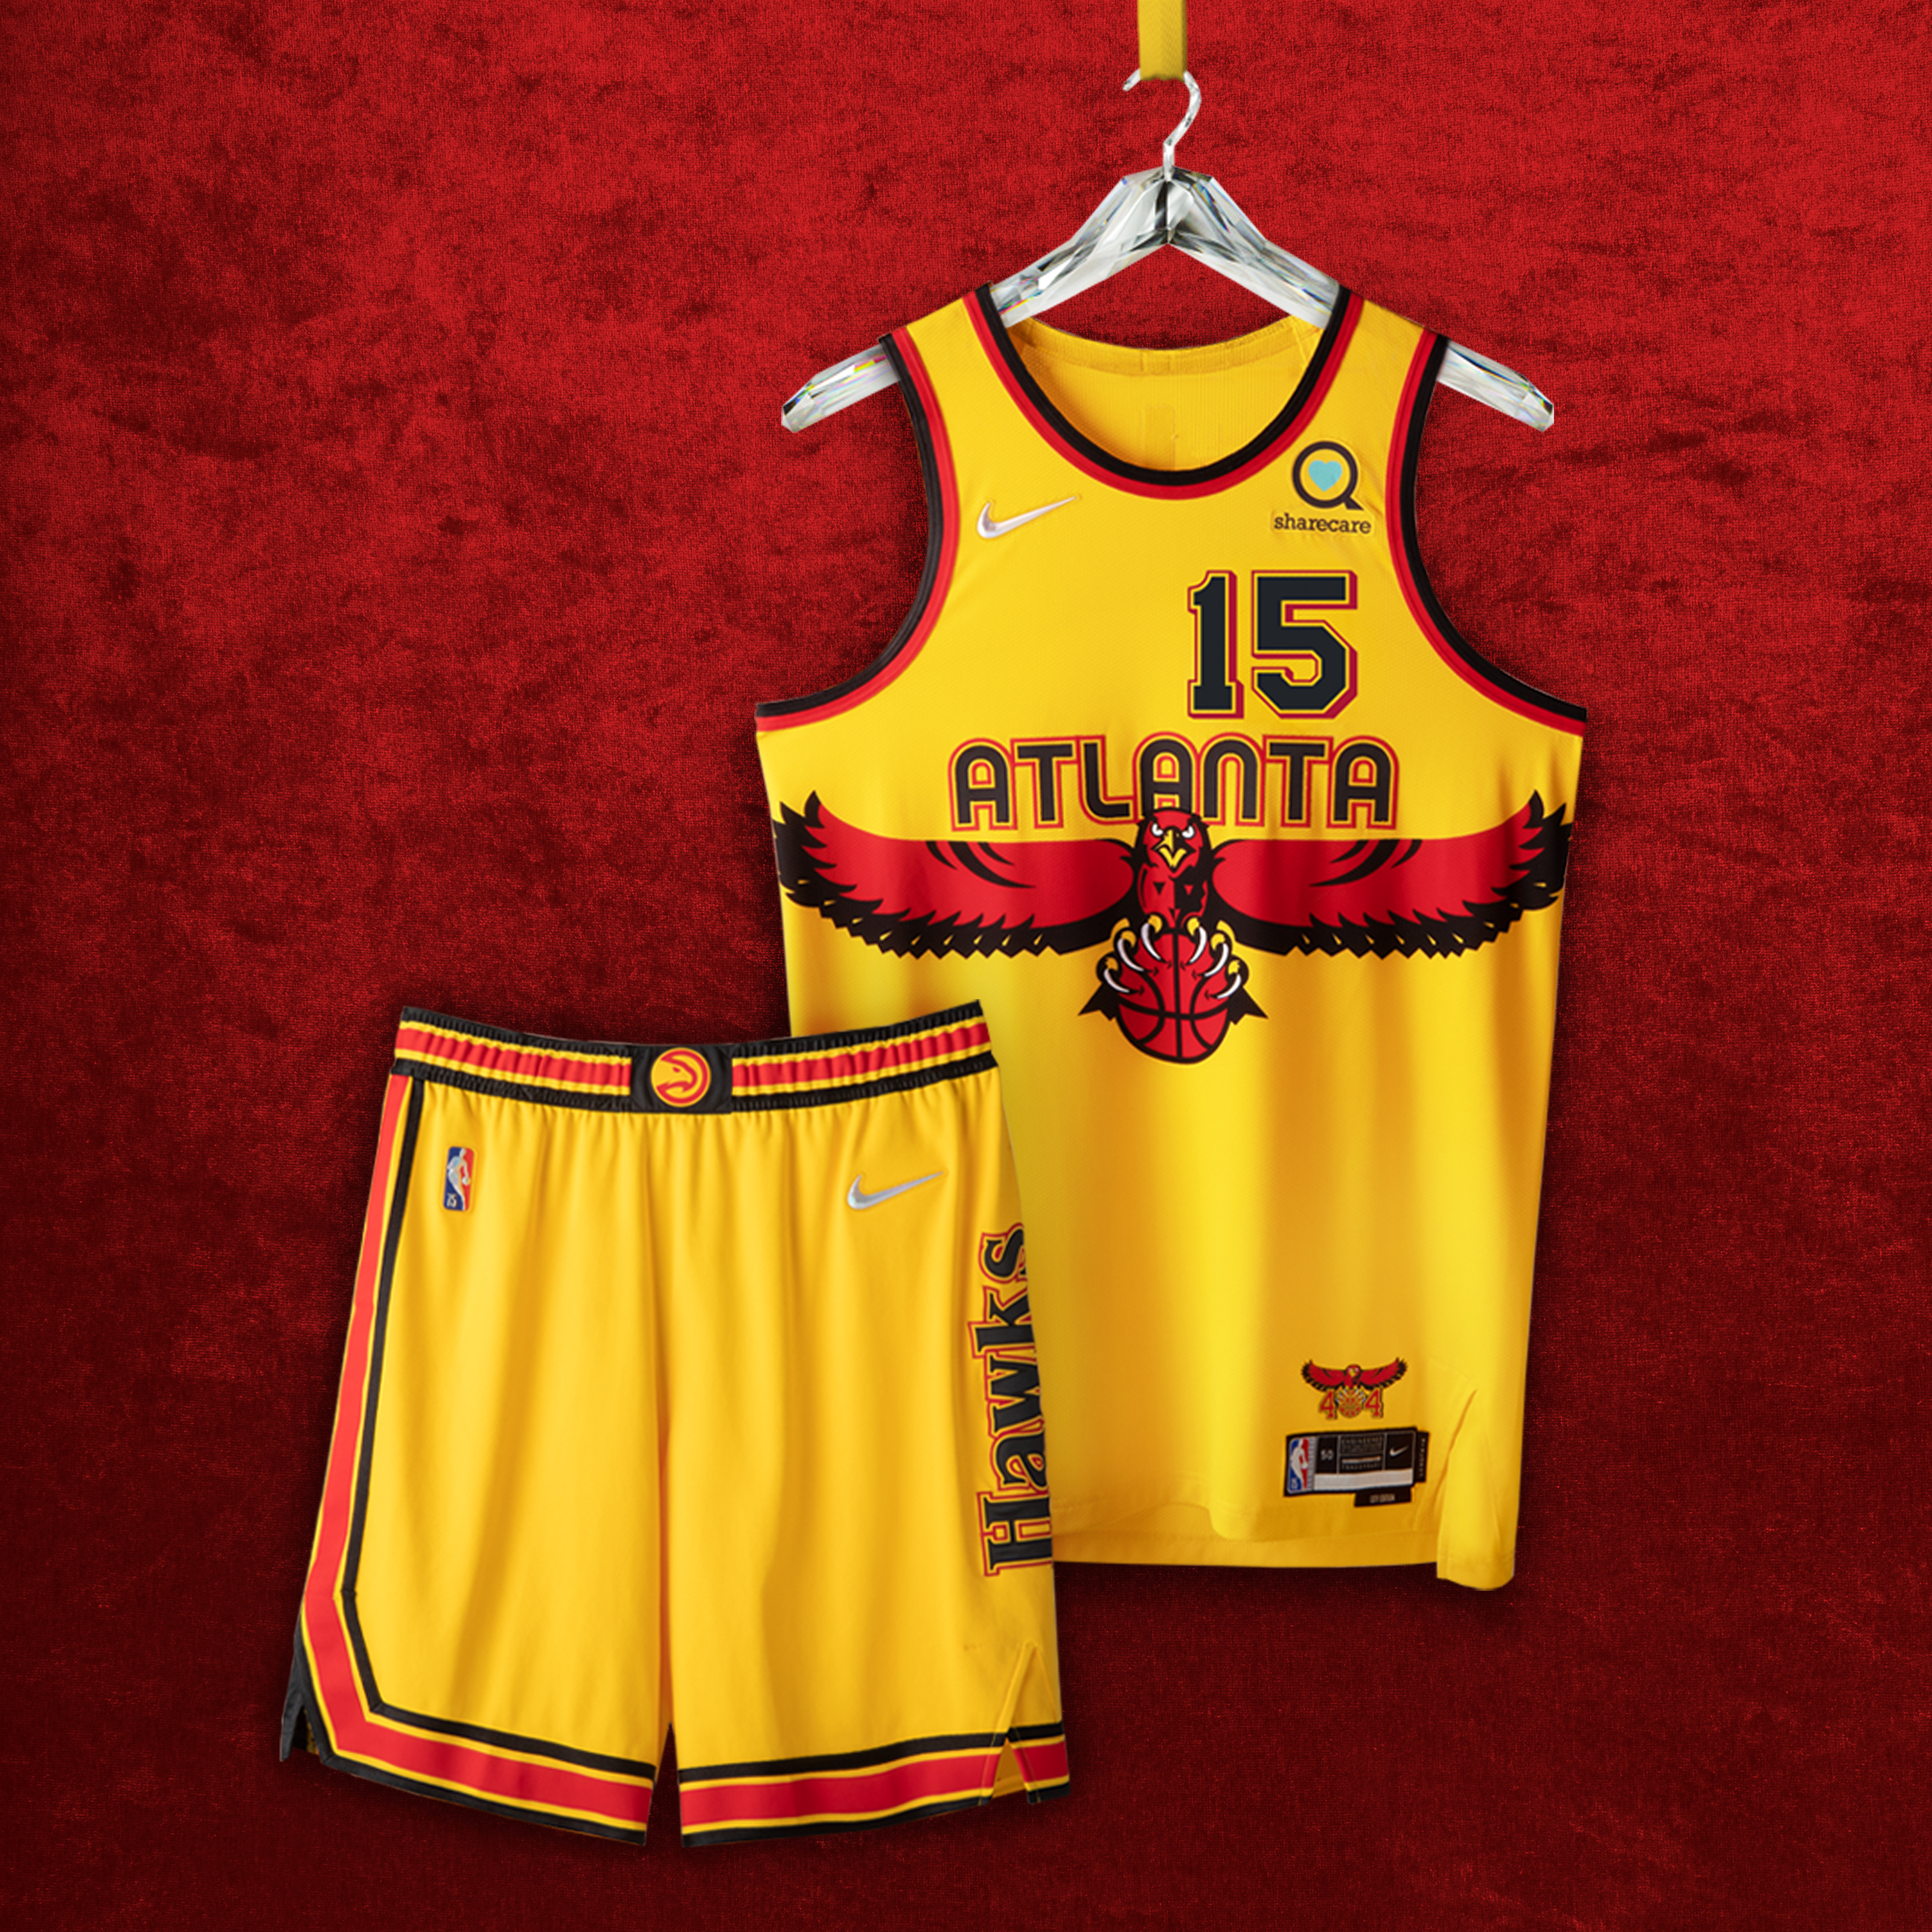 Hawks' City Edition uniforms revealed